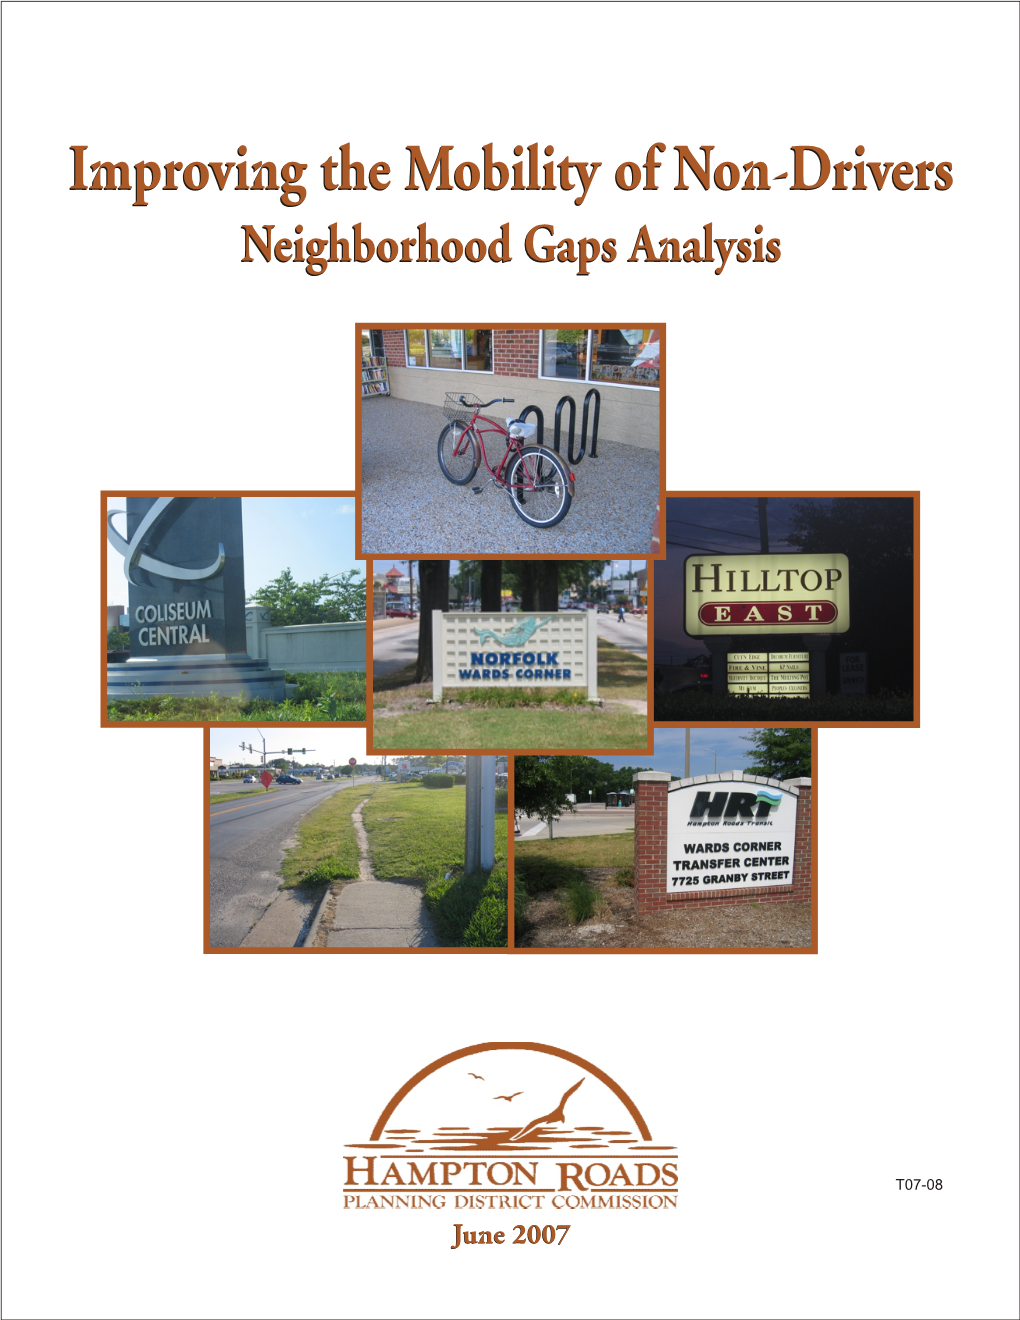 Improving Mobility of Non-Drivers:Neighborhood Gaps Analysis